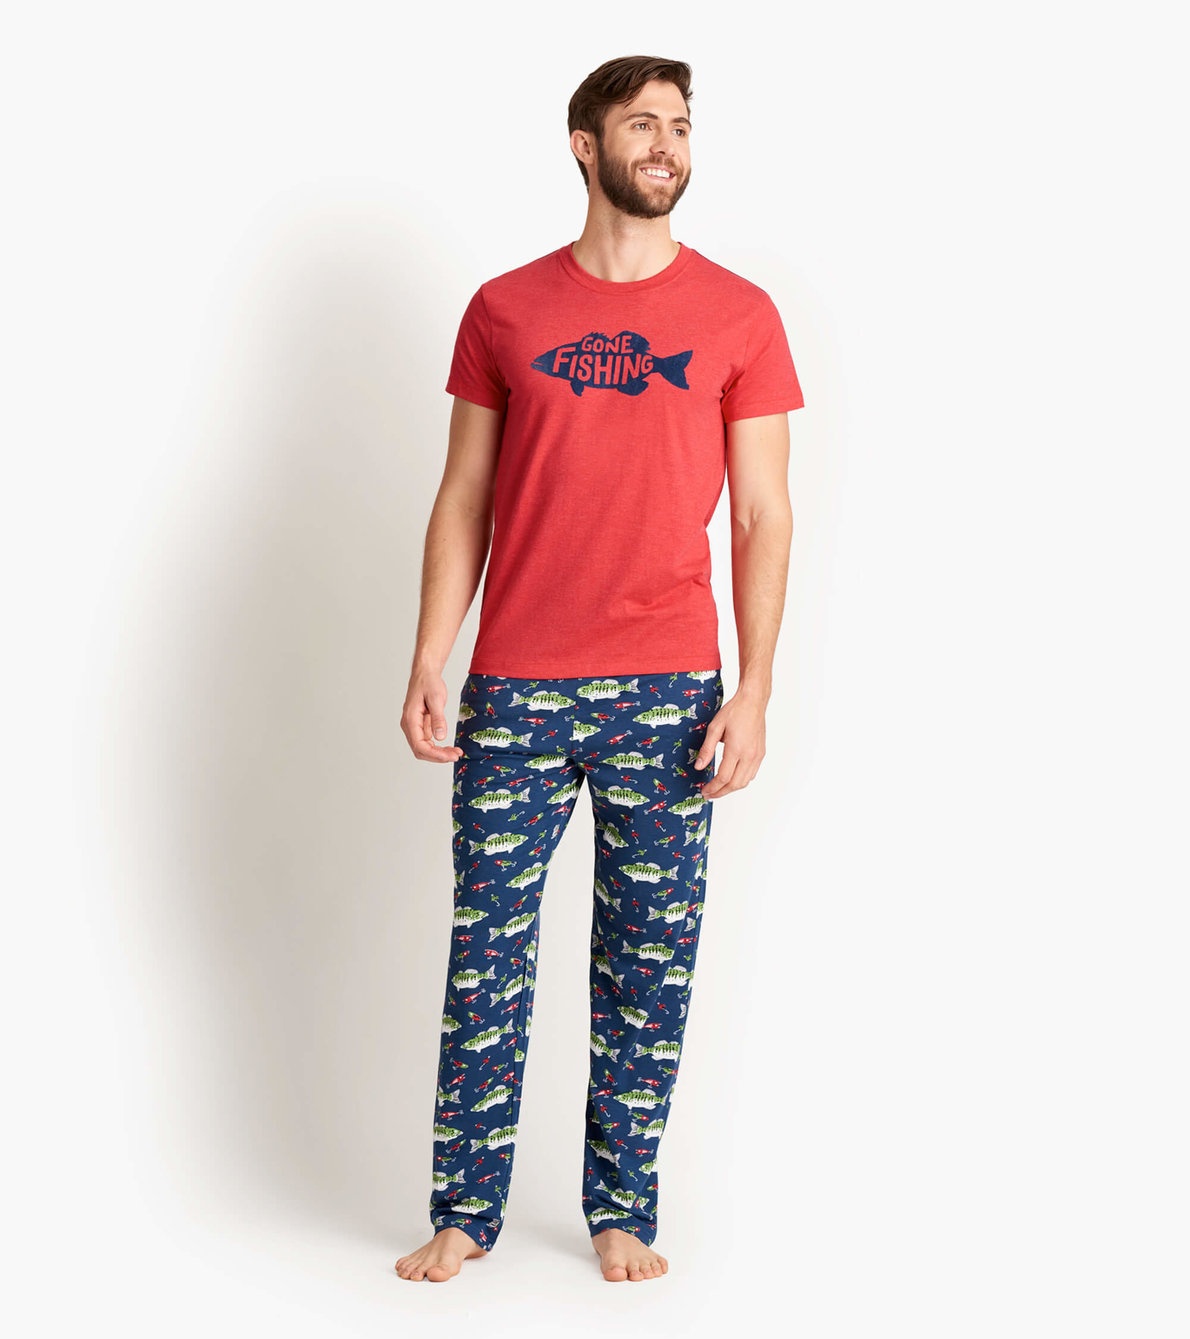 View larger image of Gone Fishing Men's Tee and Pants Pajama Separates